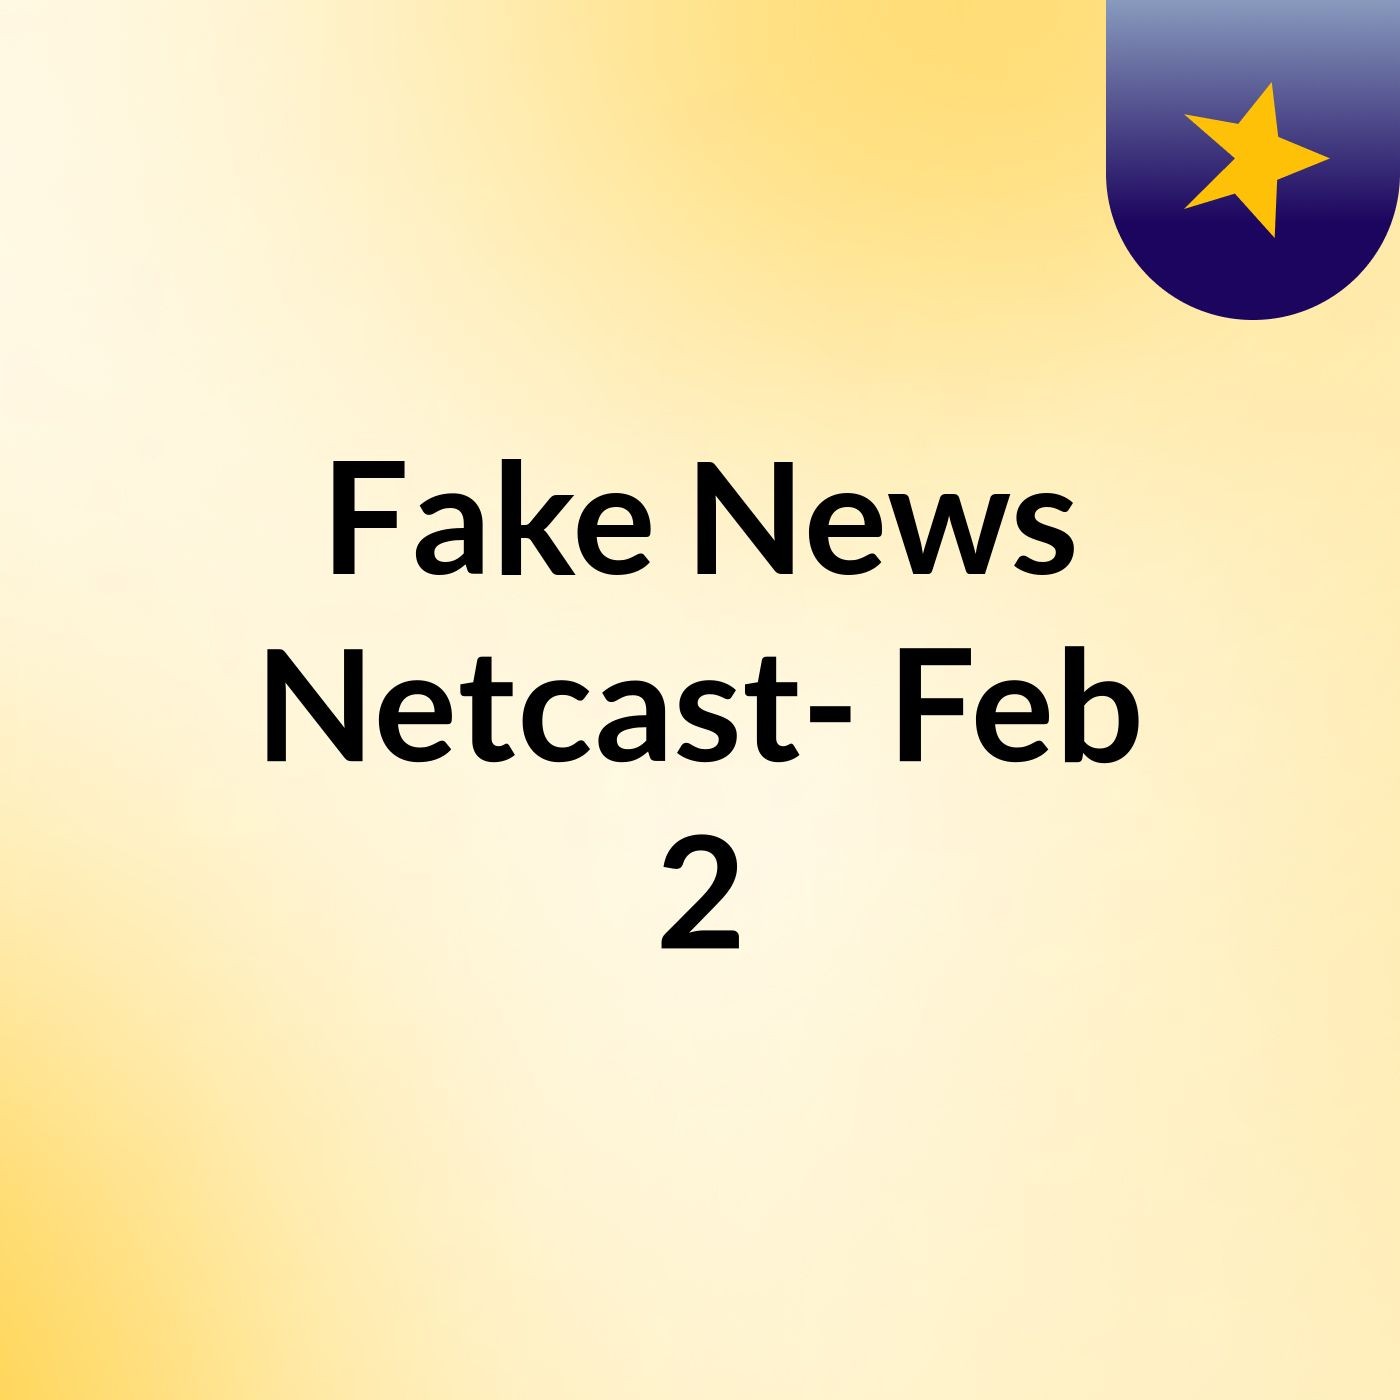 Fake News Netcast- Feb 2